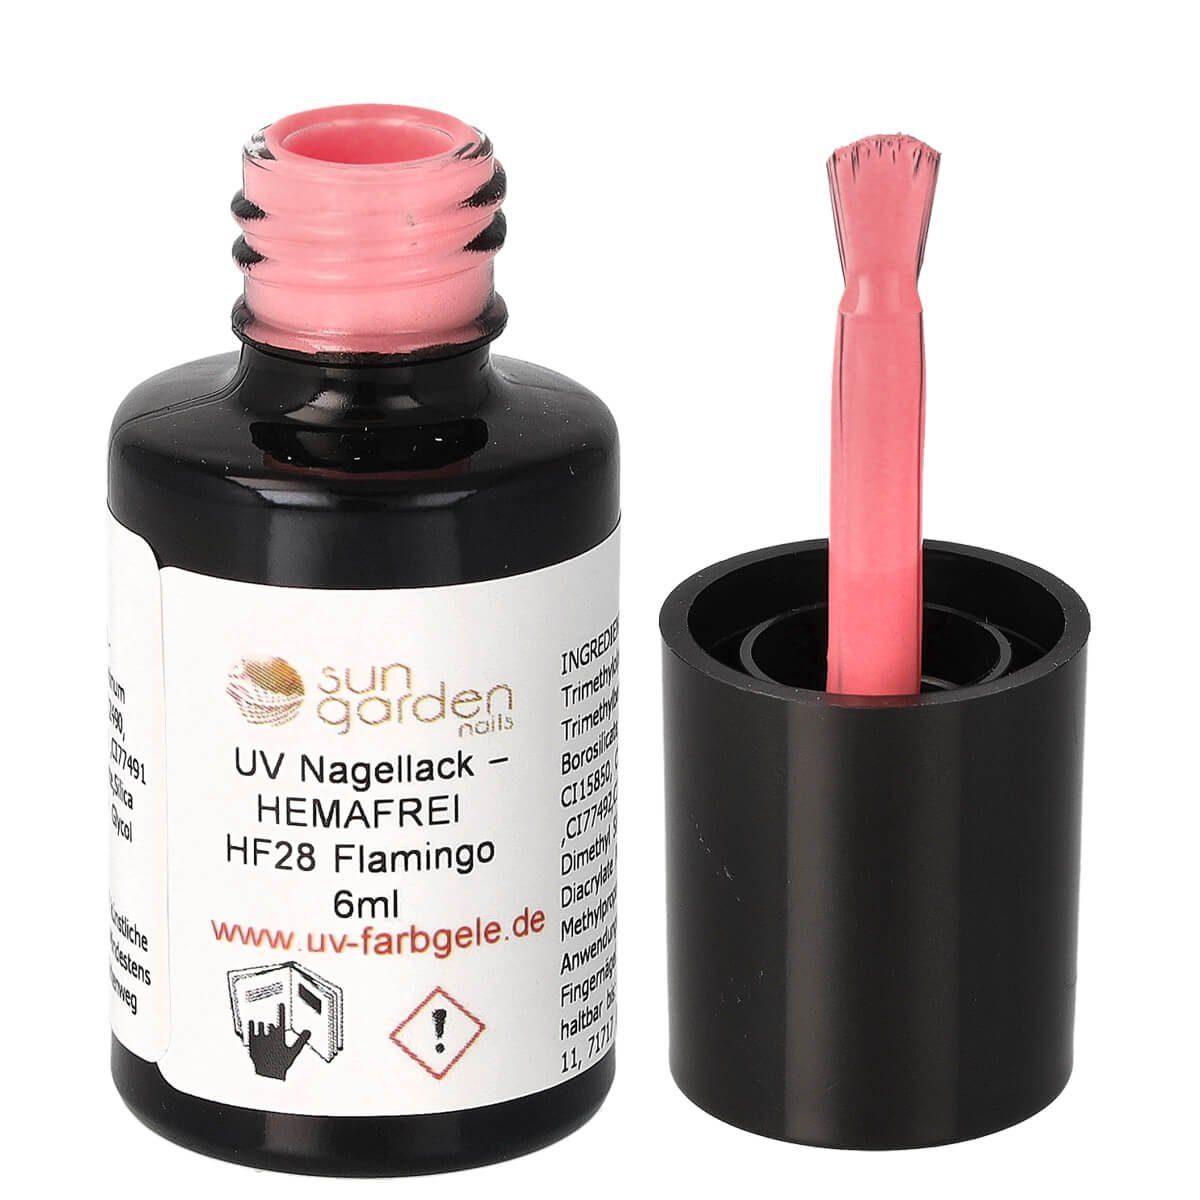 Sun Garden Nails HF28 - – 6ml Nagellack Flamingo HEMAFREI UV Nagellack